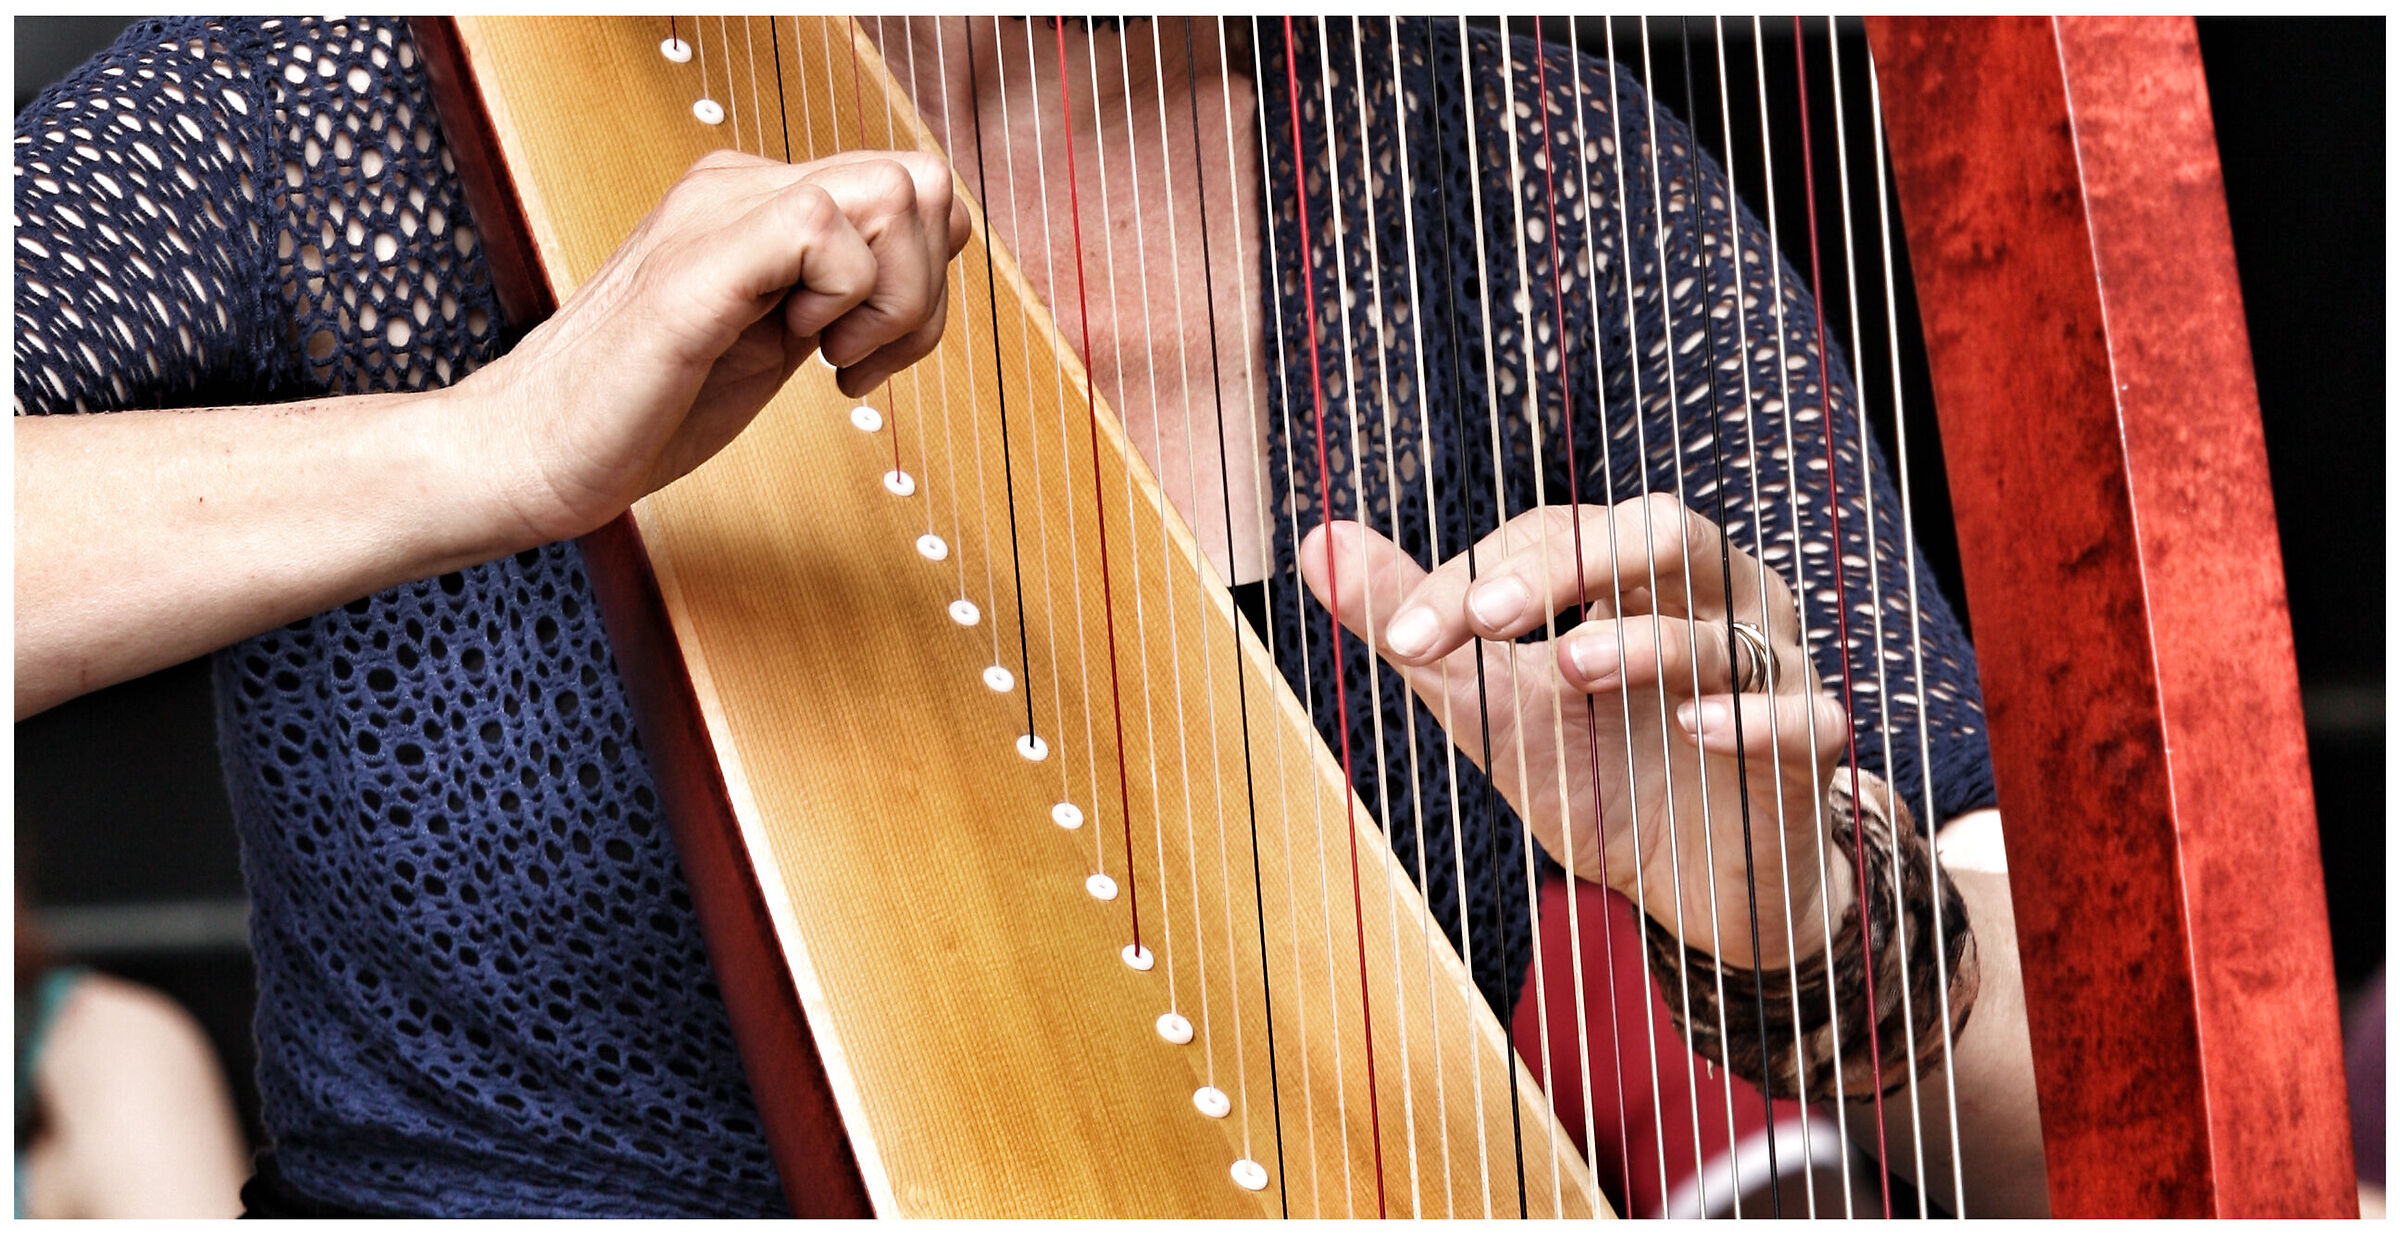 The harp player...